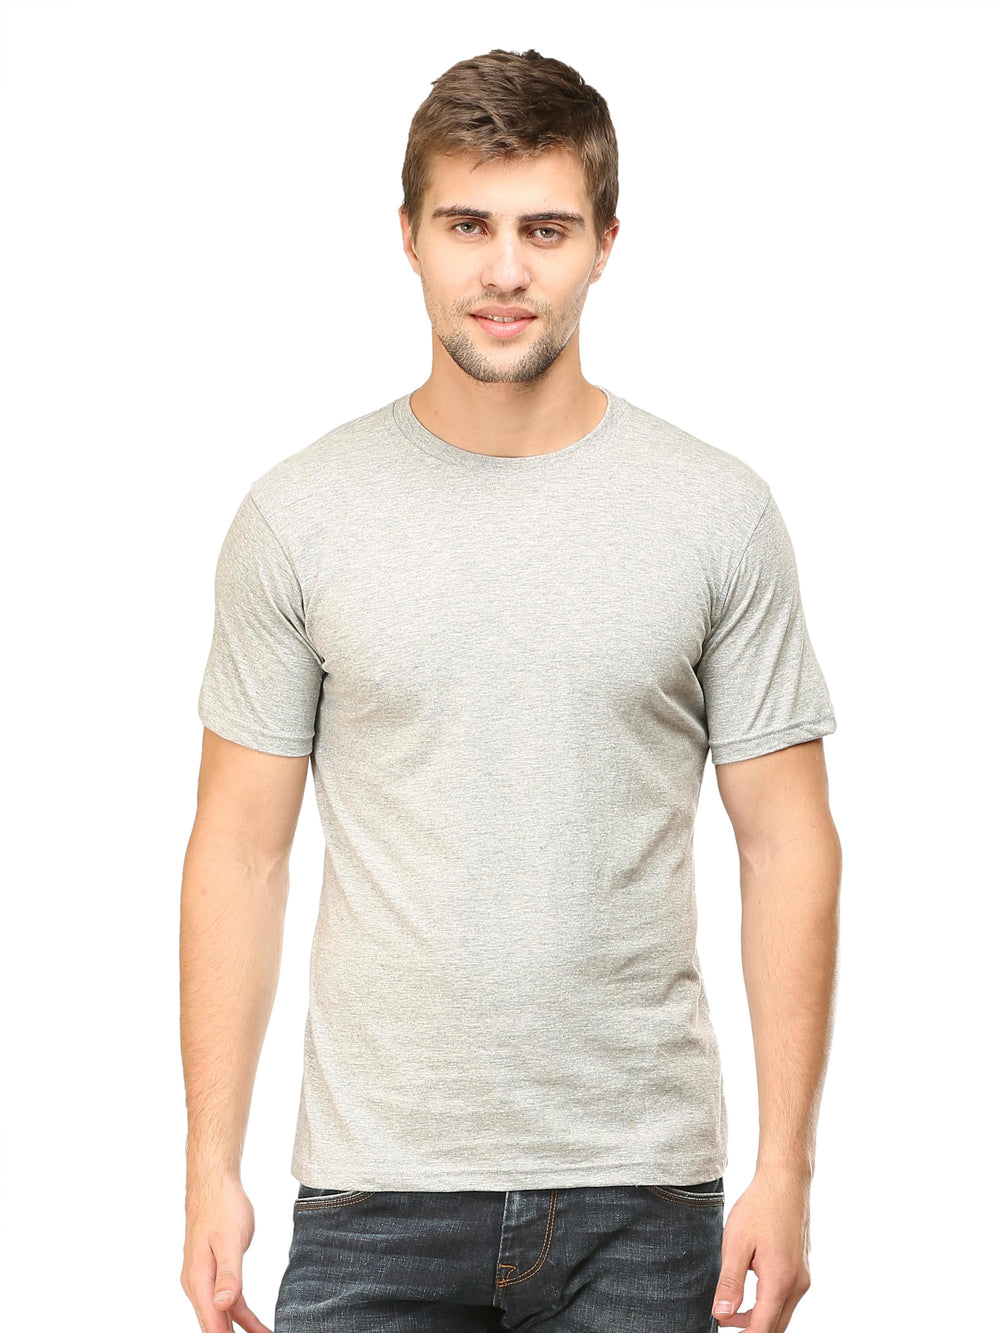 Solids : Premium Grey Melange Unisex T -shirt